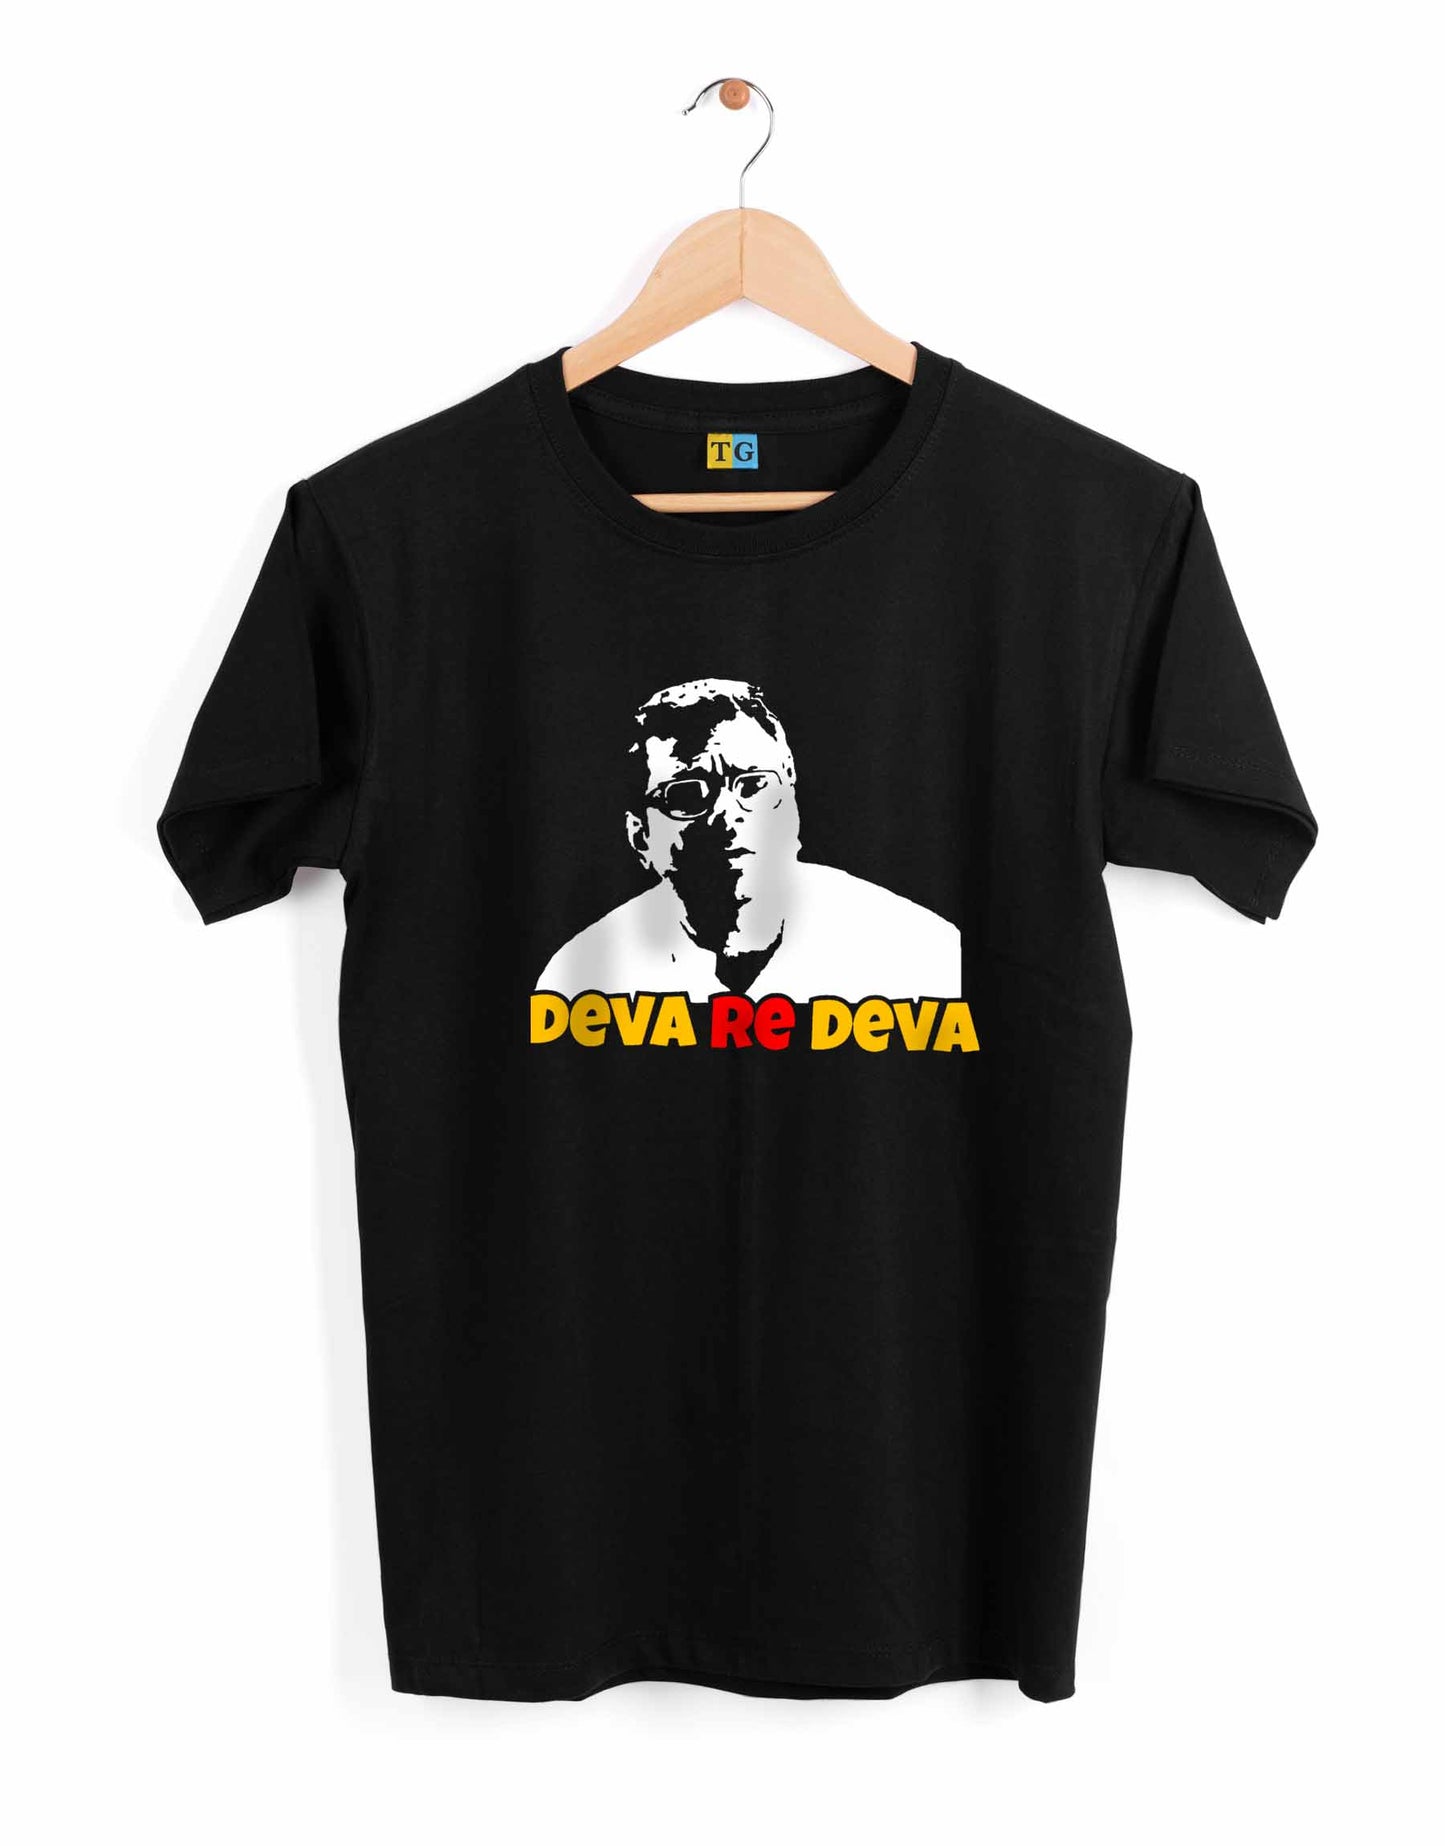 Deva Re Deva - TEEGURUJI Printed T shirt - 499.00 - TEEGURUJI - Free Shipping